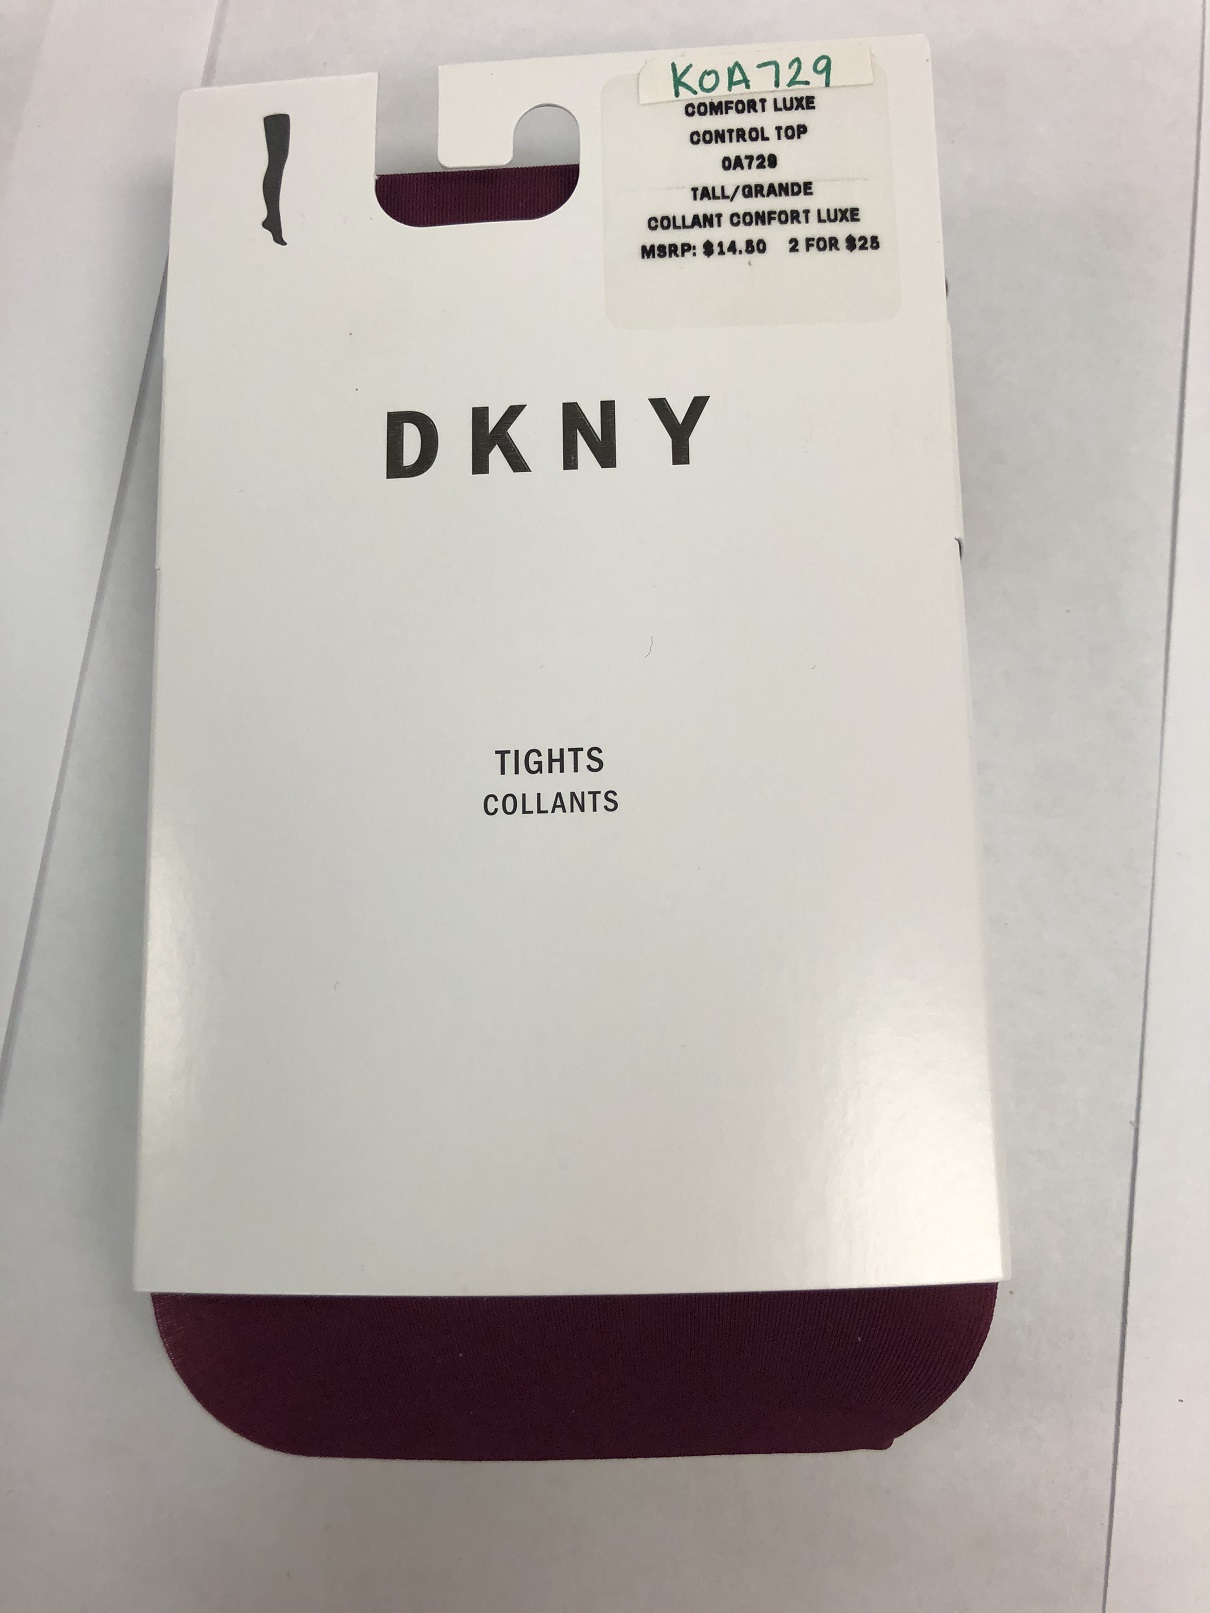 DKNY Comfort Luxe Control Top Tights C/O /1 women Hanes-C/O